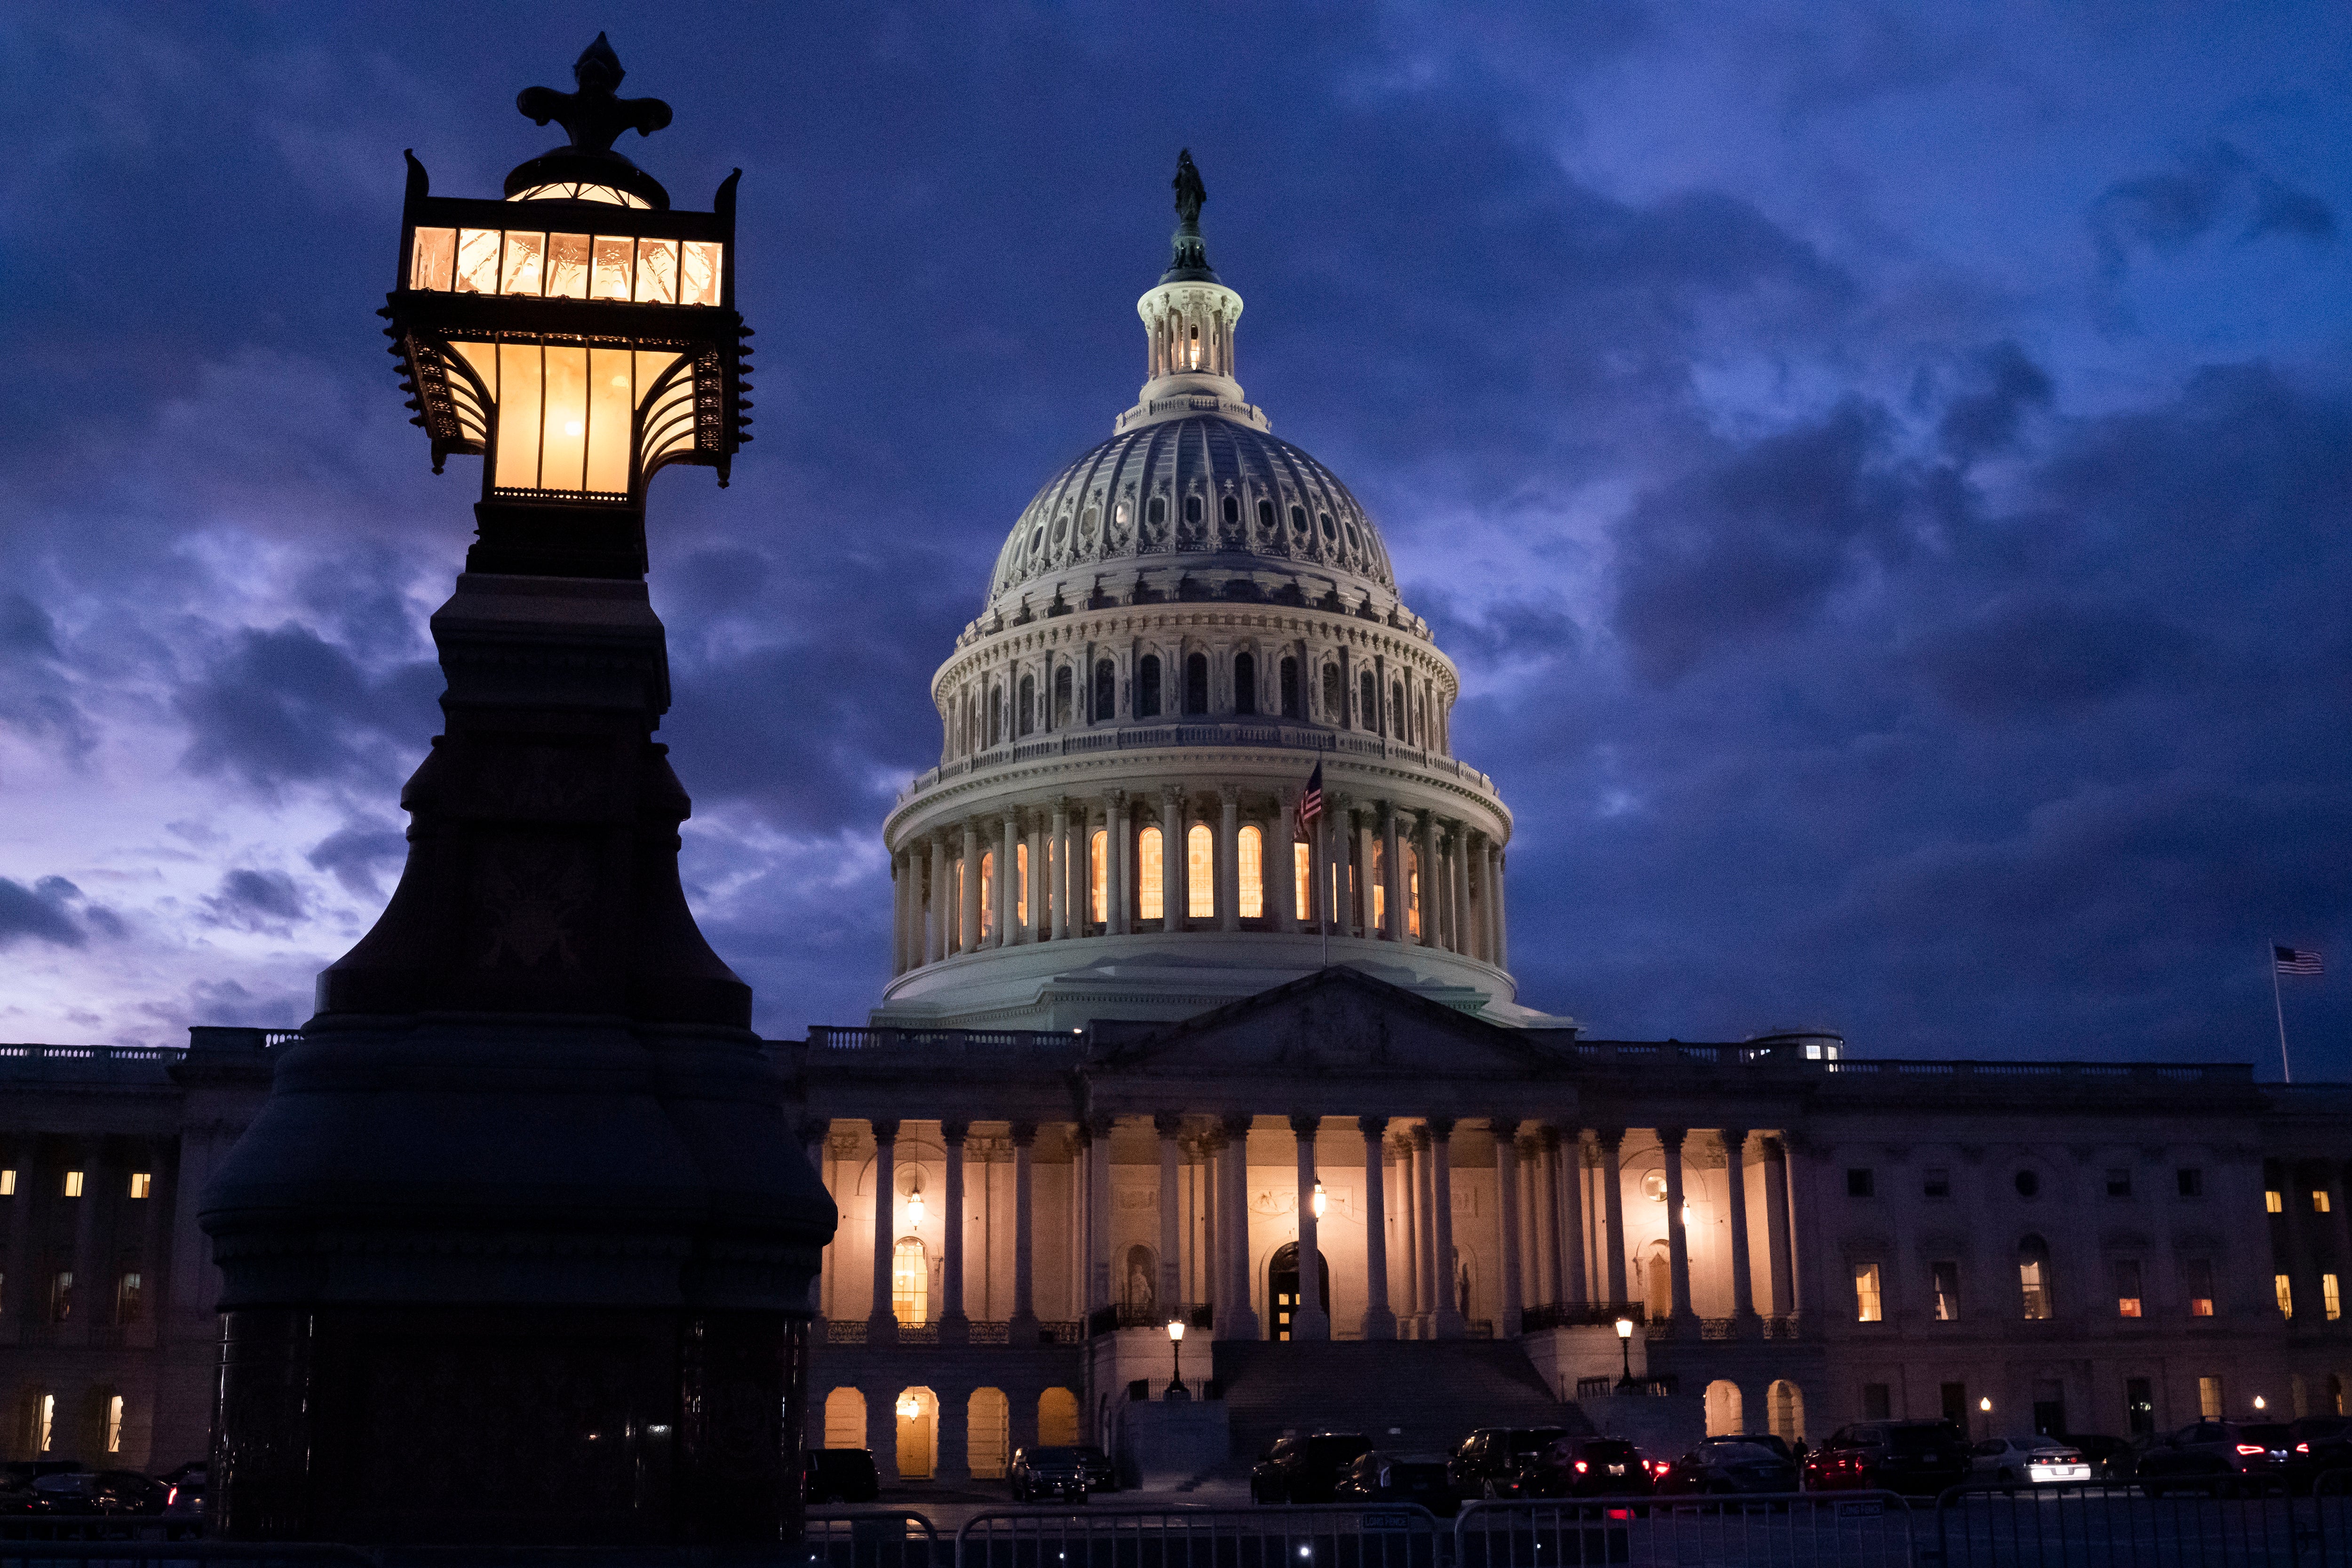 Night falls at the Capitol in Washington